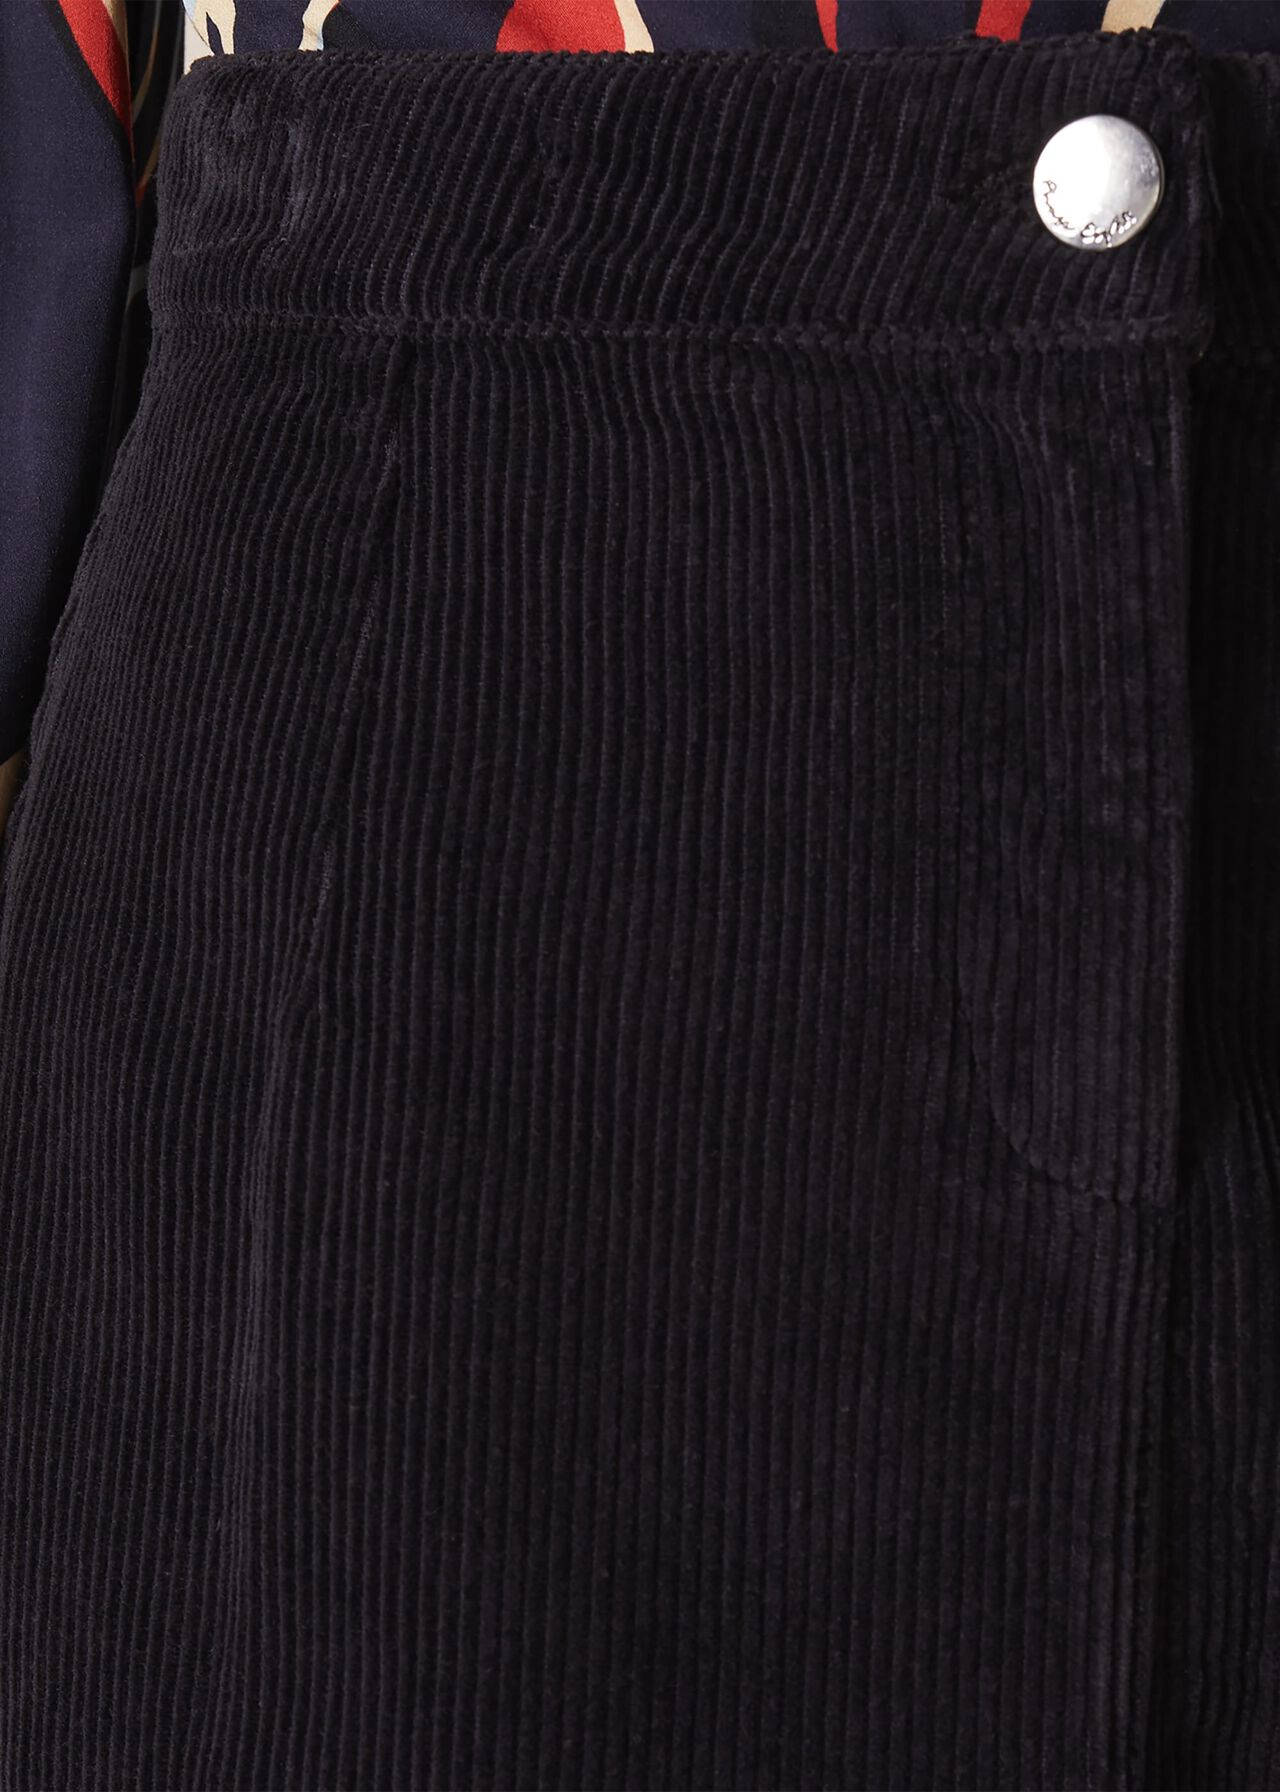 Tealeigh Cord Skirt